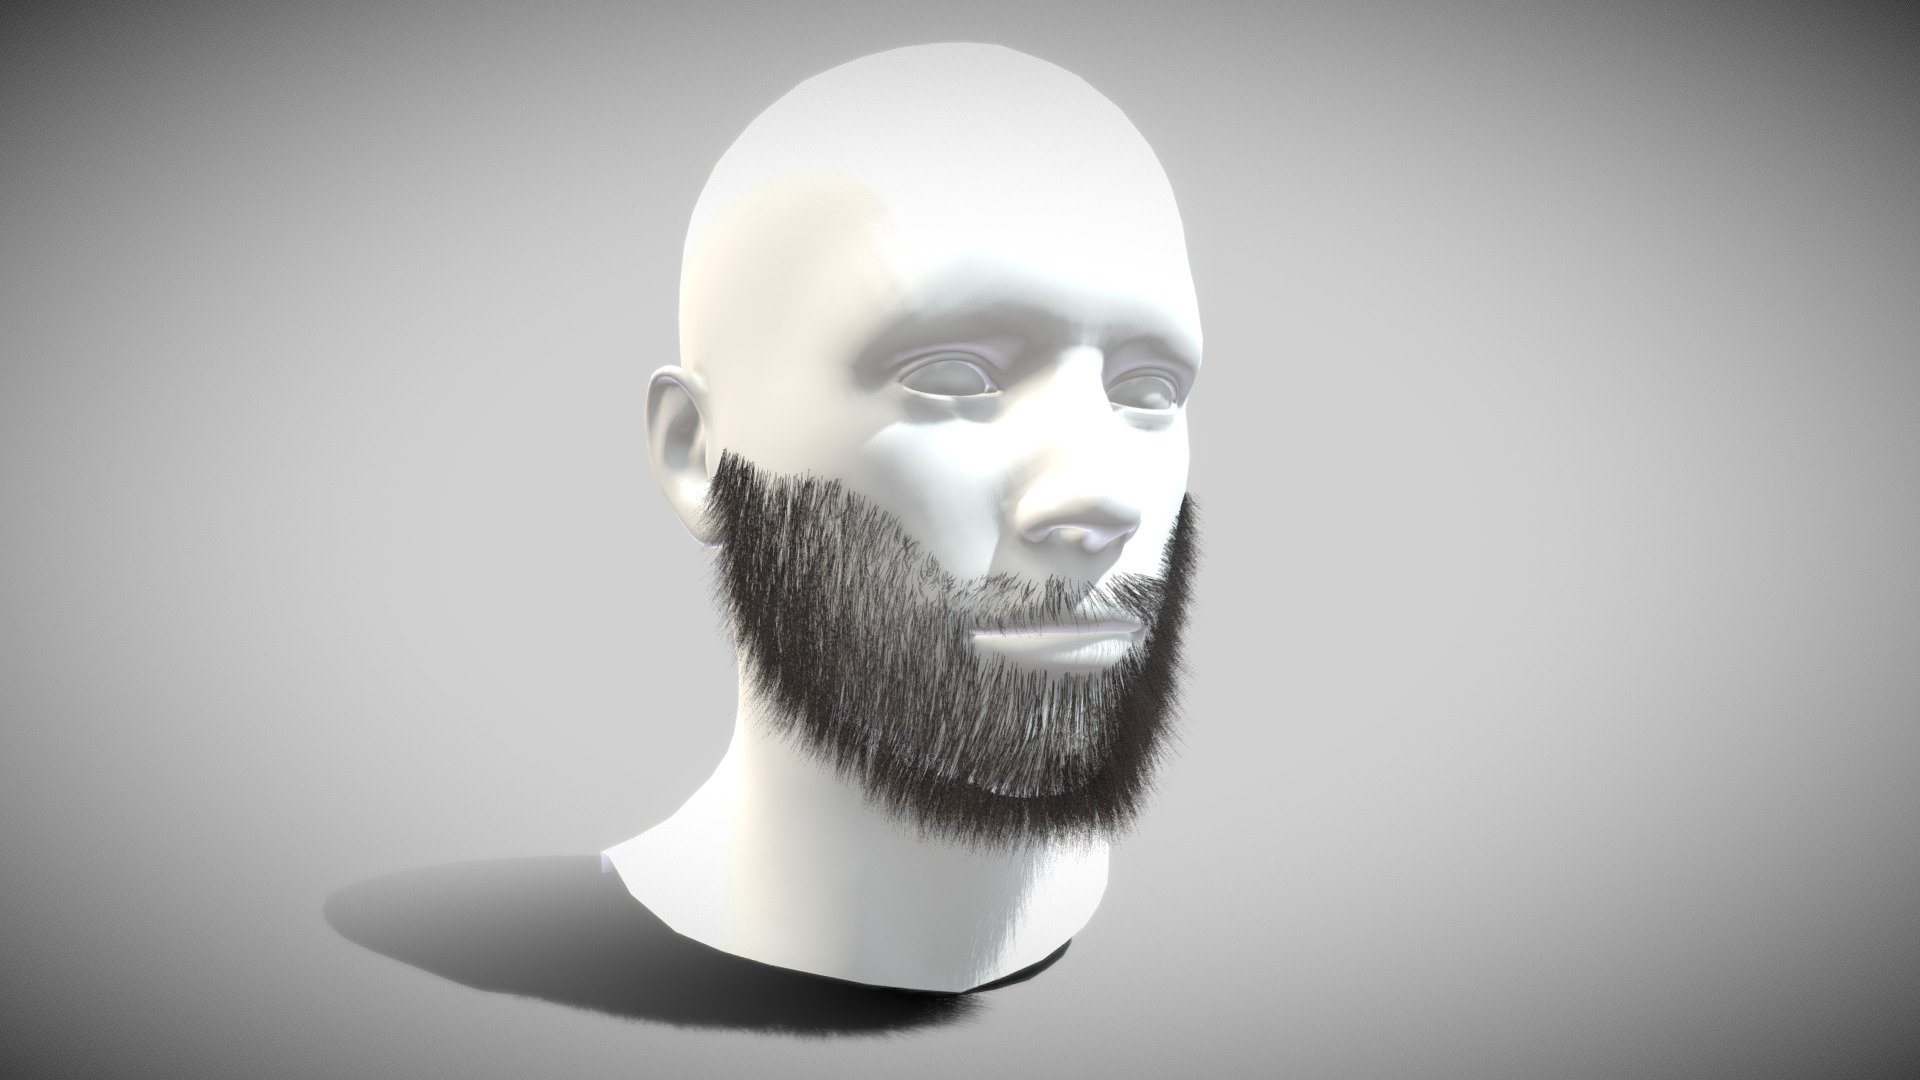 Fiber Mesh

Vertex colored

Separated Objects: Beard / Head / Eyes

by Lucid Dreams visuals

www.luciddreamsvisuals.com.ar - Messy Beard - Buy Royalty Free 3D model by Lucid Dreams (@lucid_dreams_visuals) 3d model